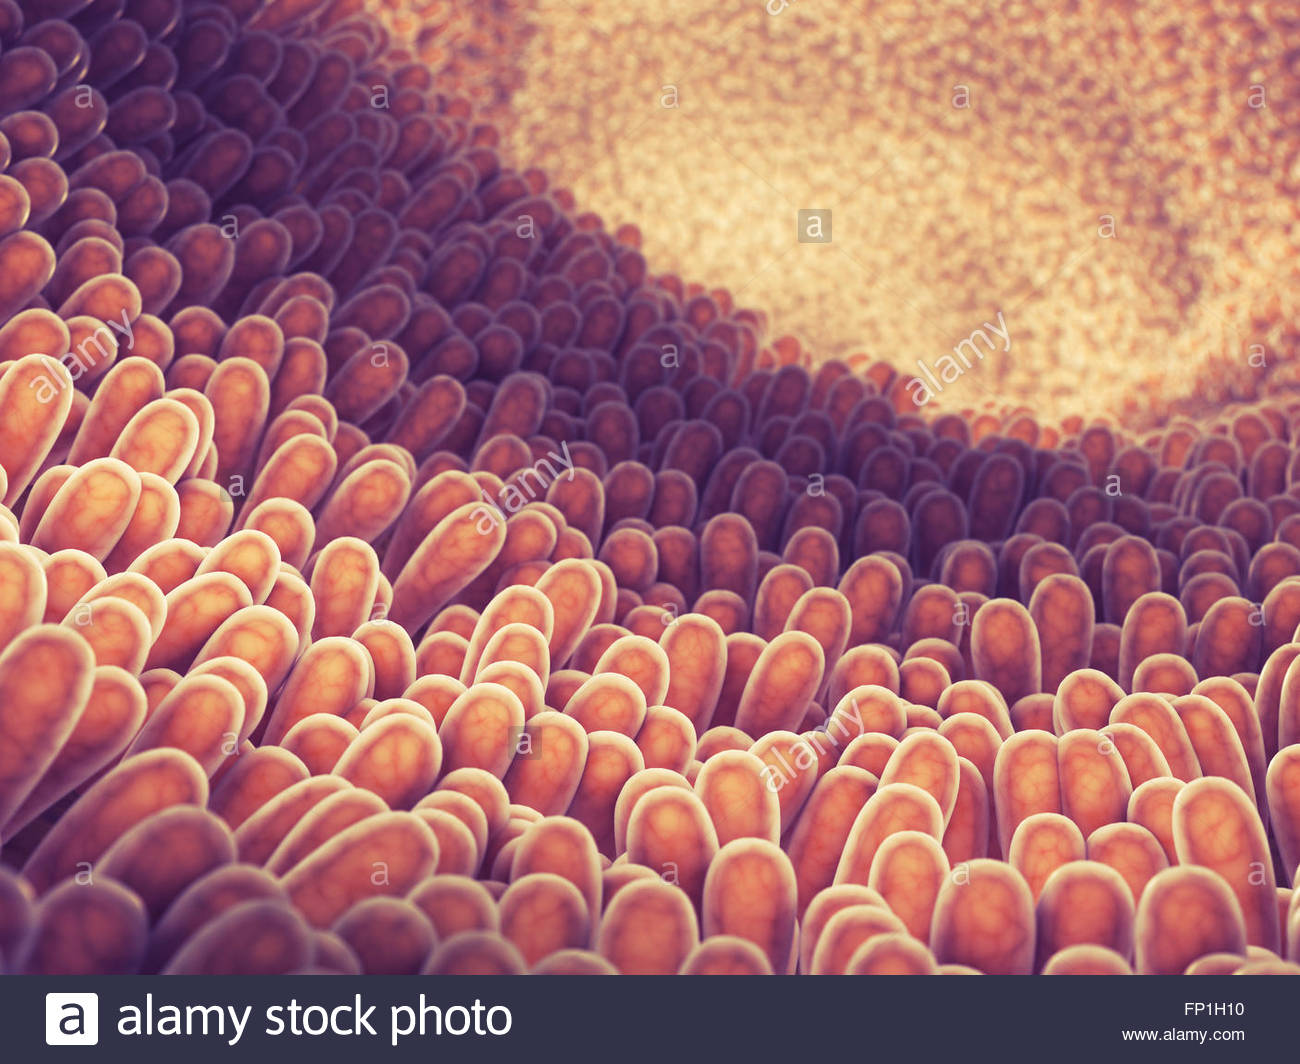 https://www.alamy.com/stock-photo-intestine-lining-and-villi-food-digestion-and-absorption-intestinal-99609580.html